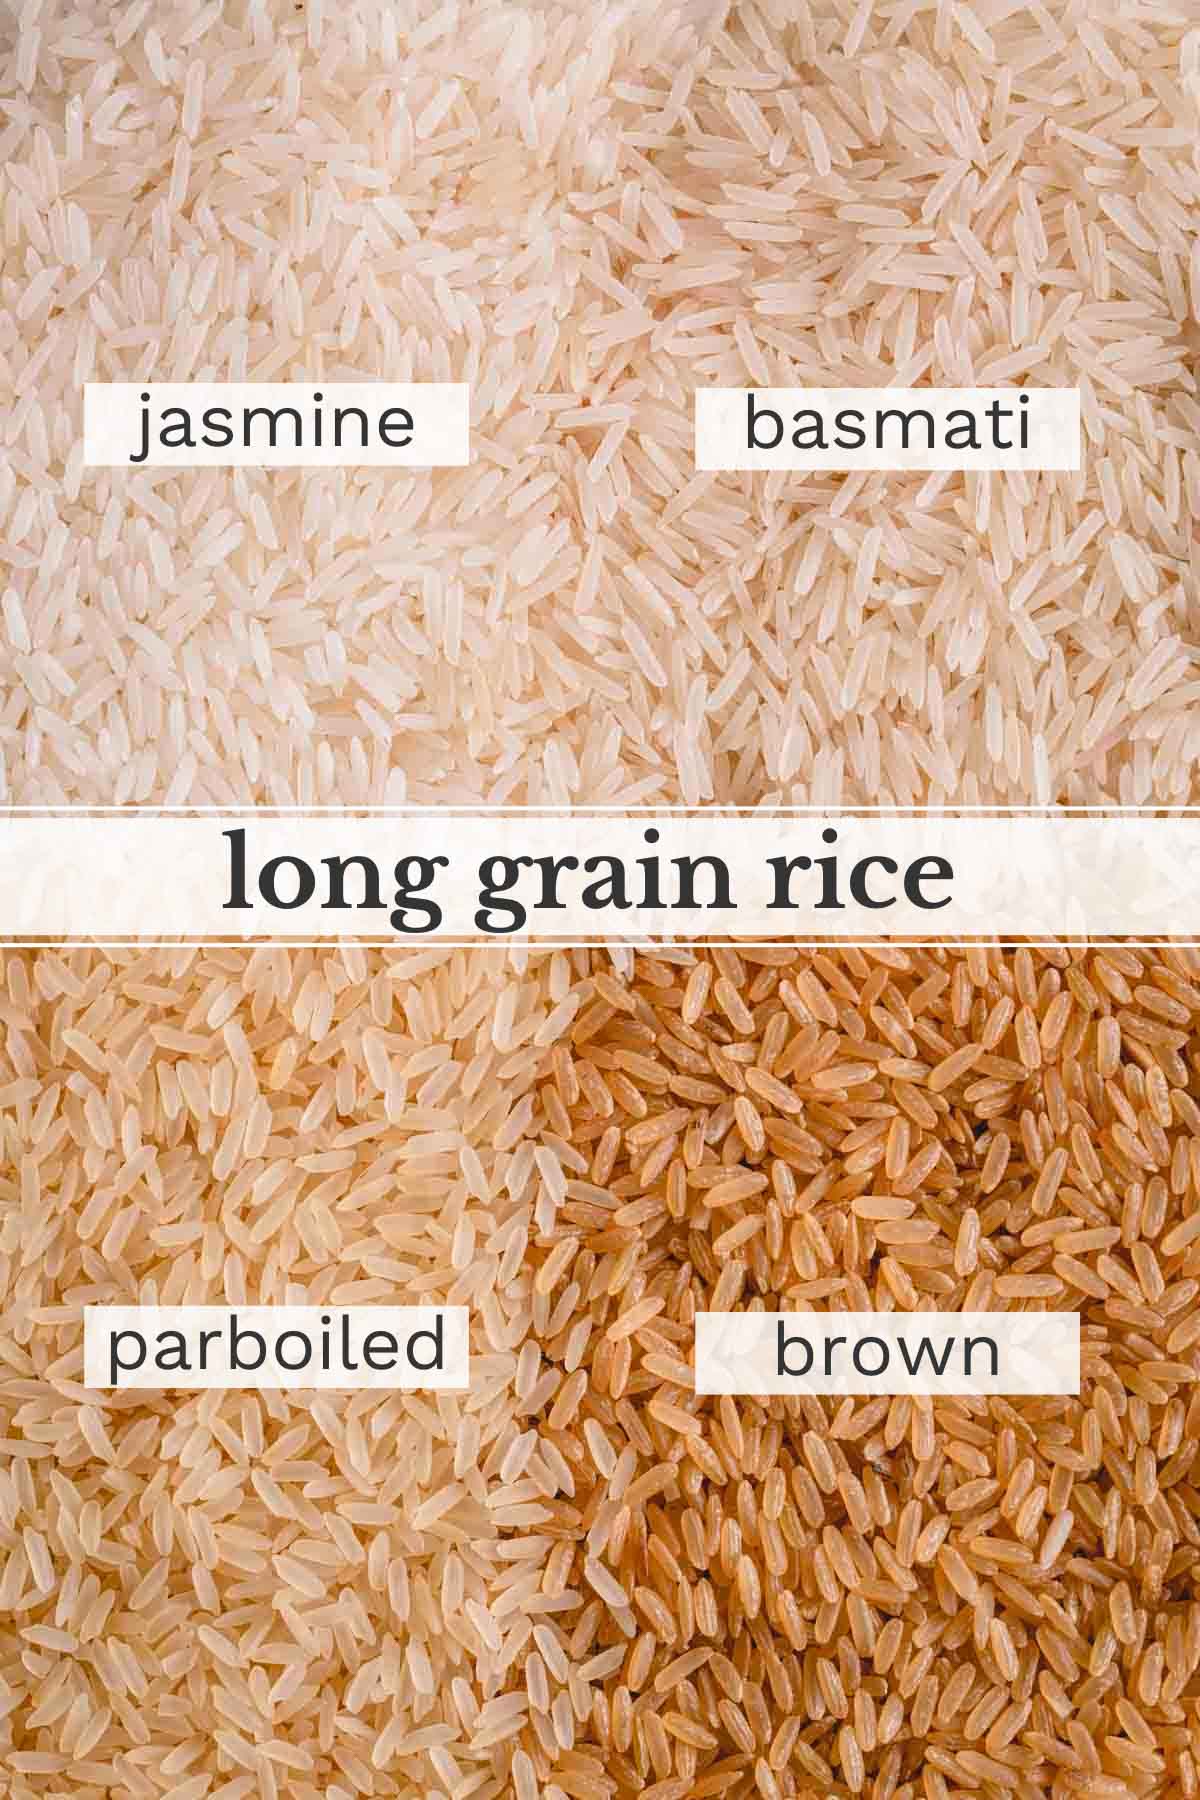 4 types of long-grain rice: jasmine, basmati, parboiled and brown.